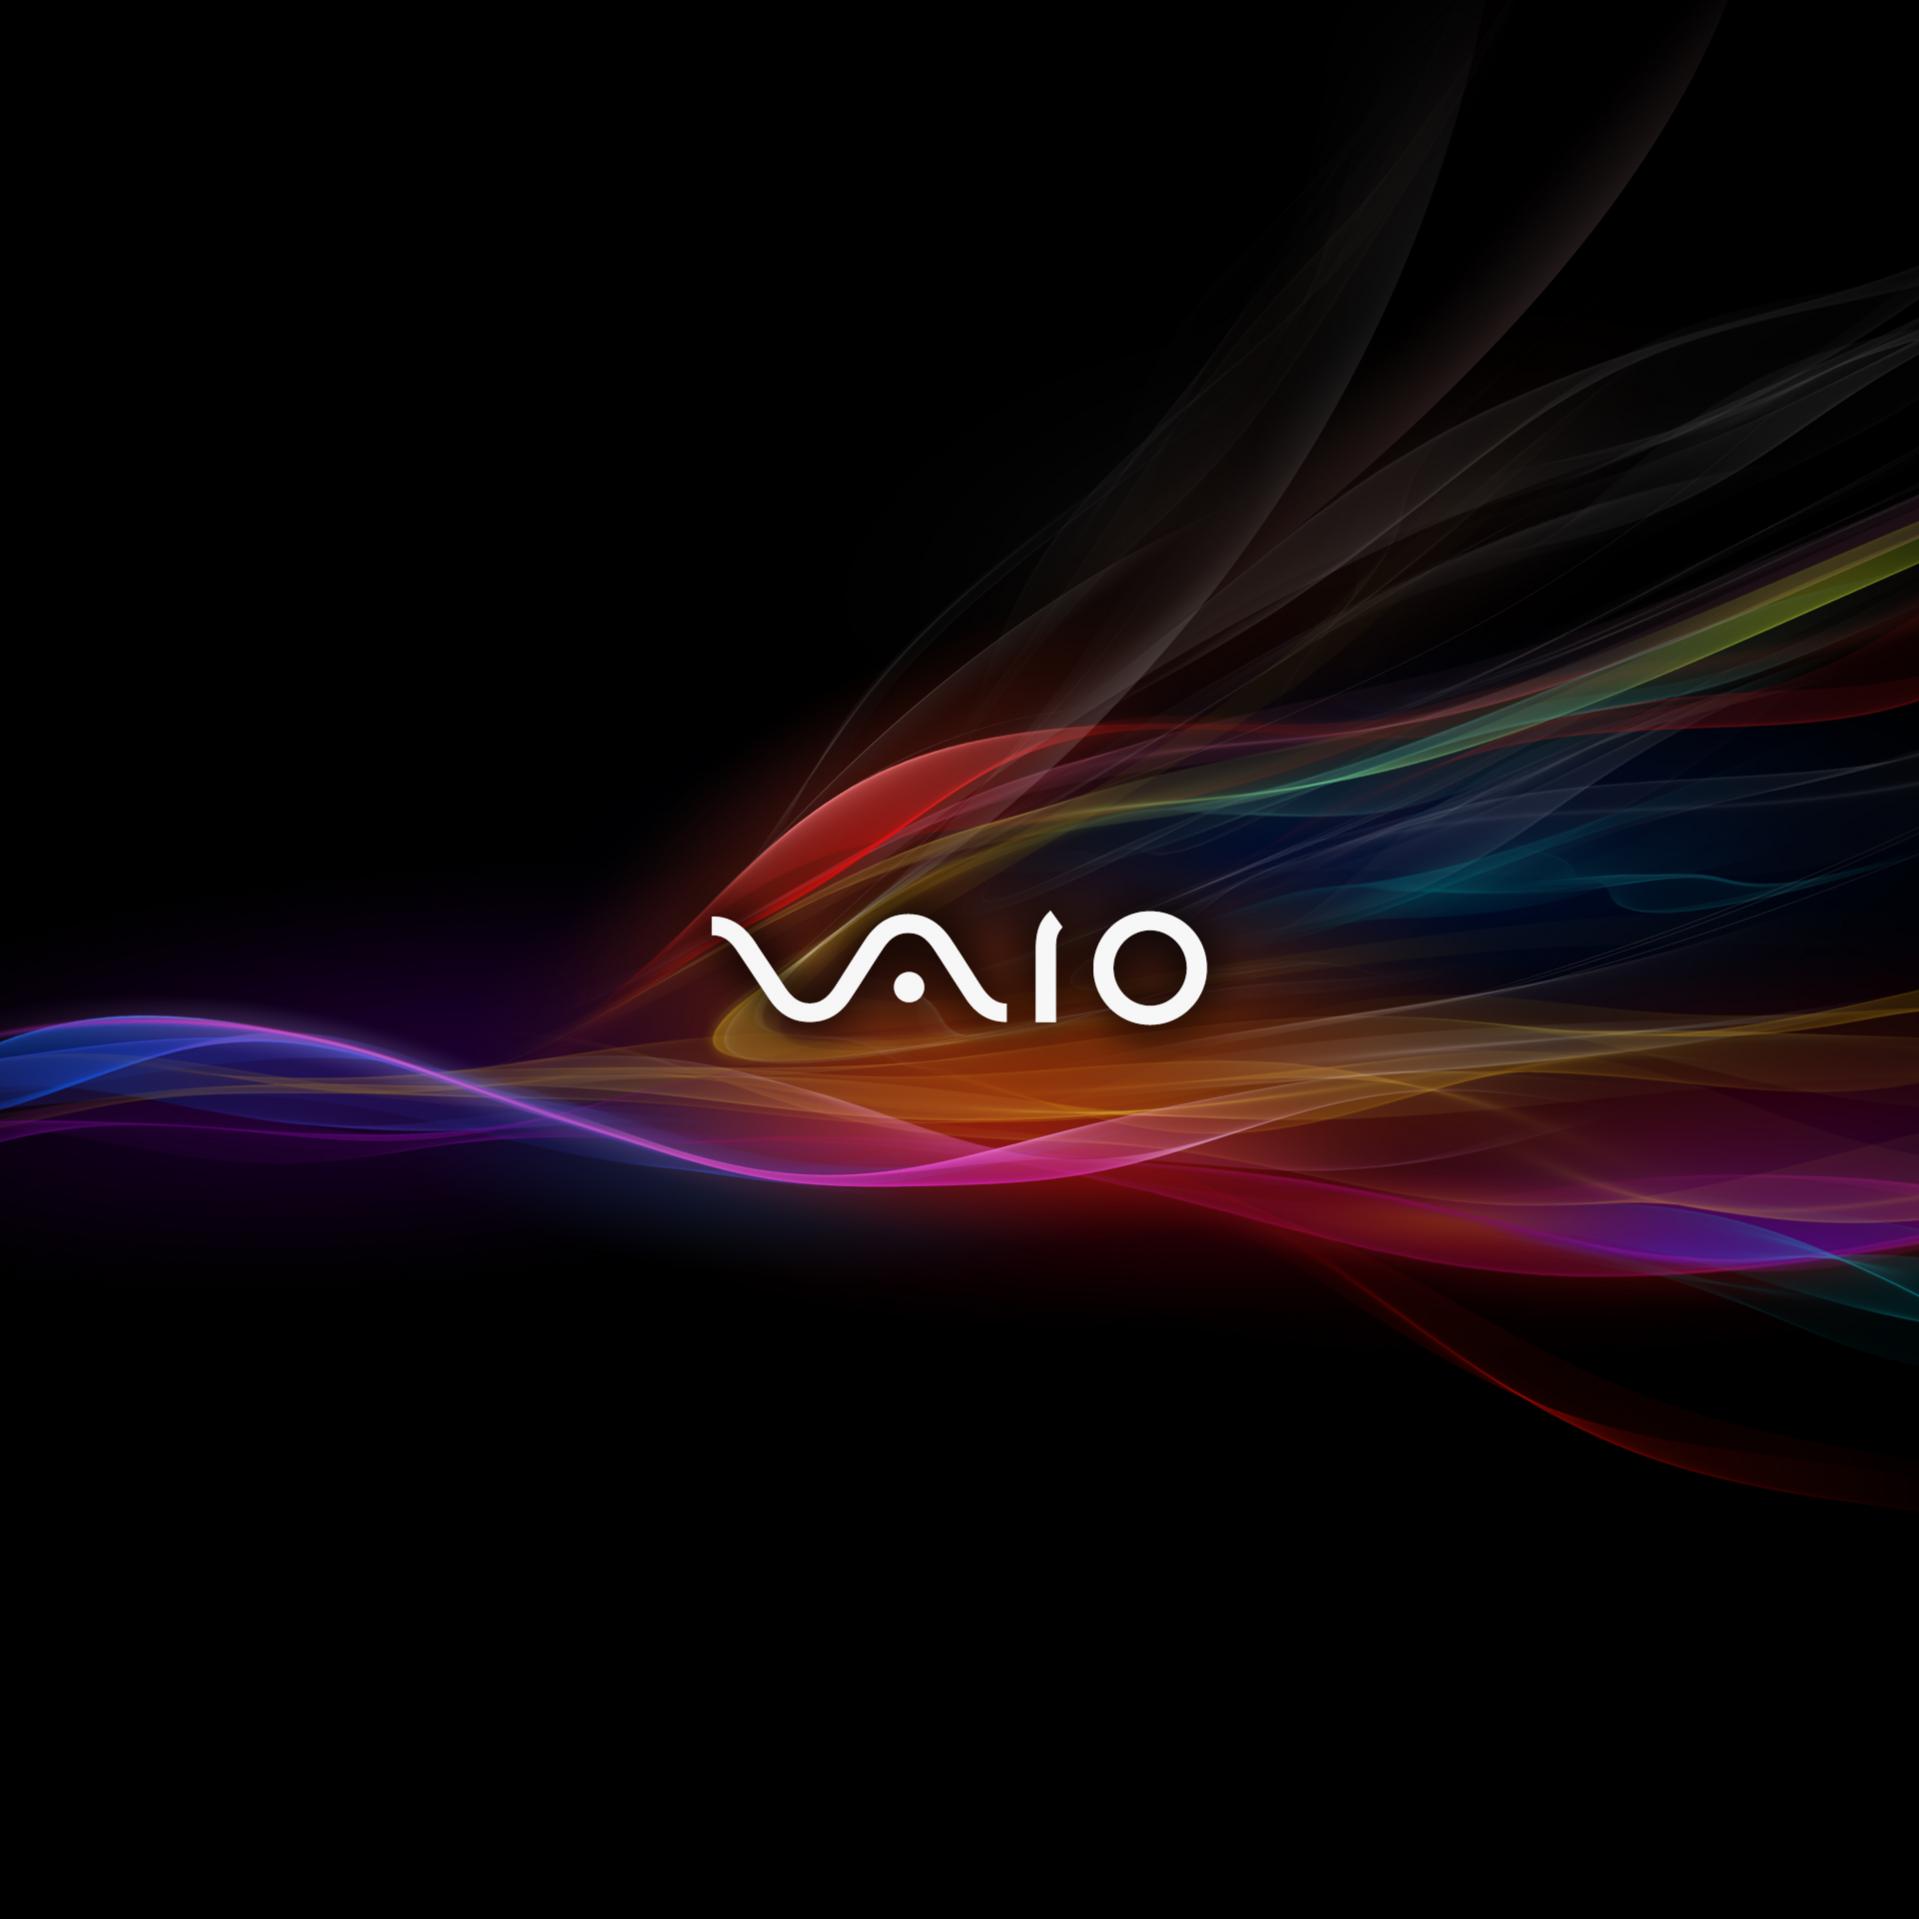 Share Vaio Pro Wallpaper Sony Xperia Tablet Z